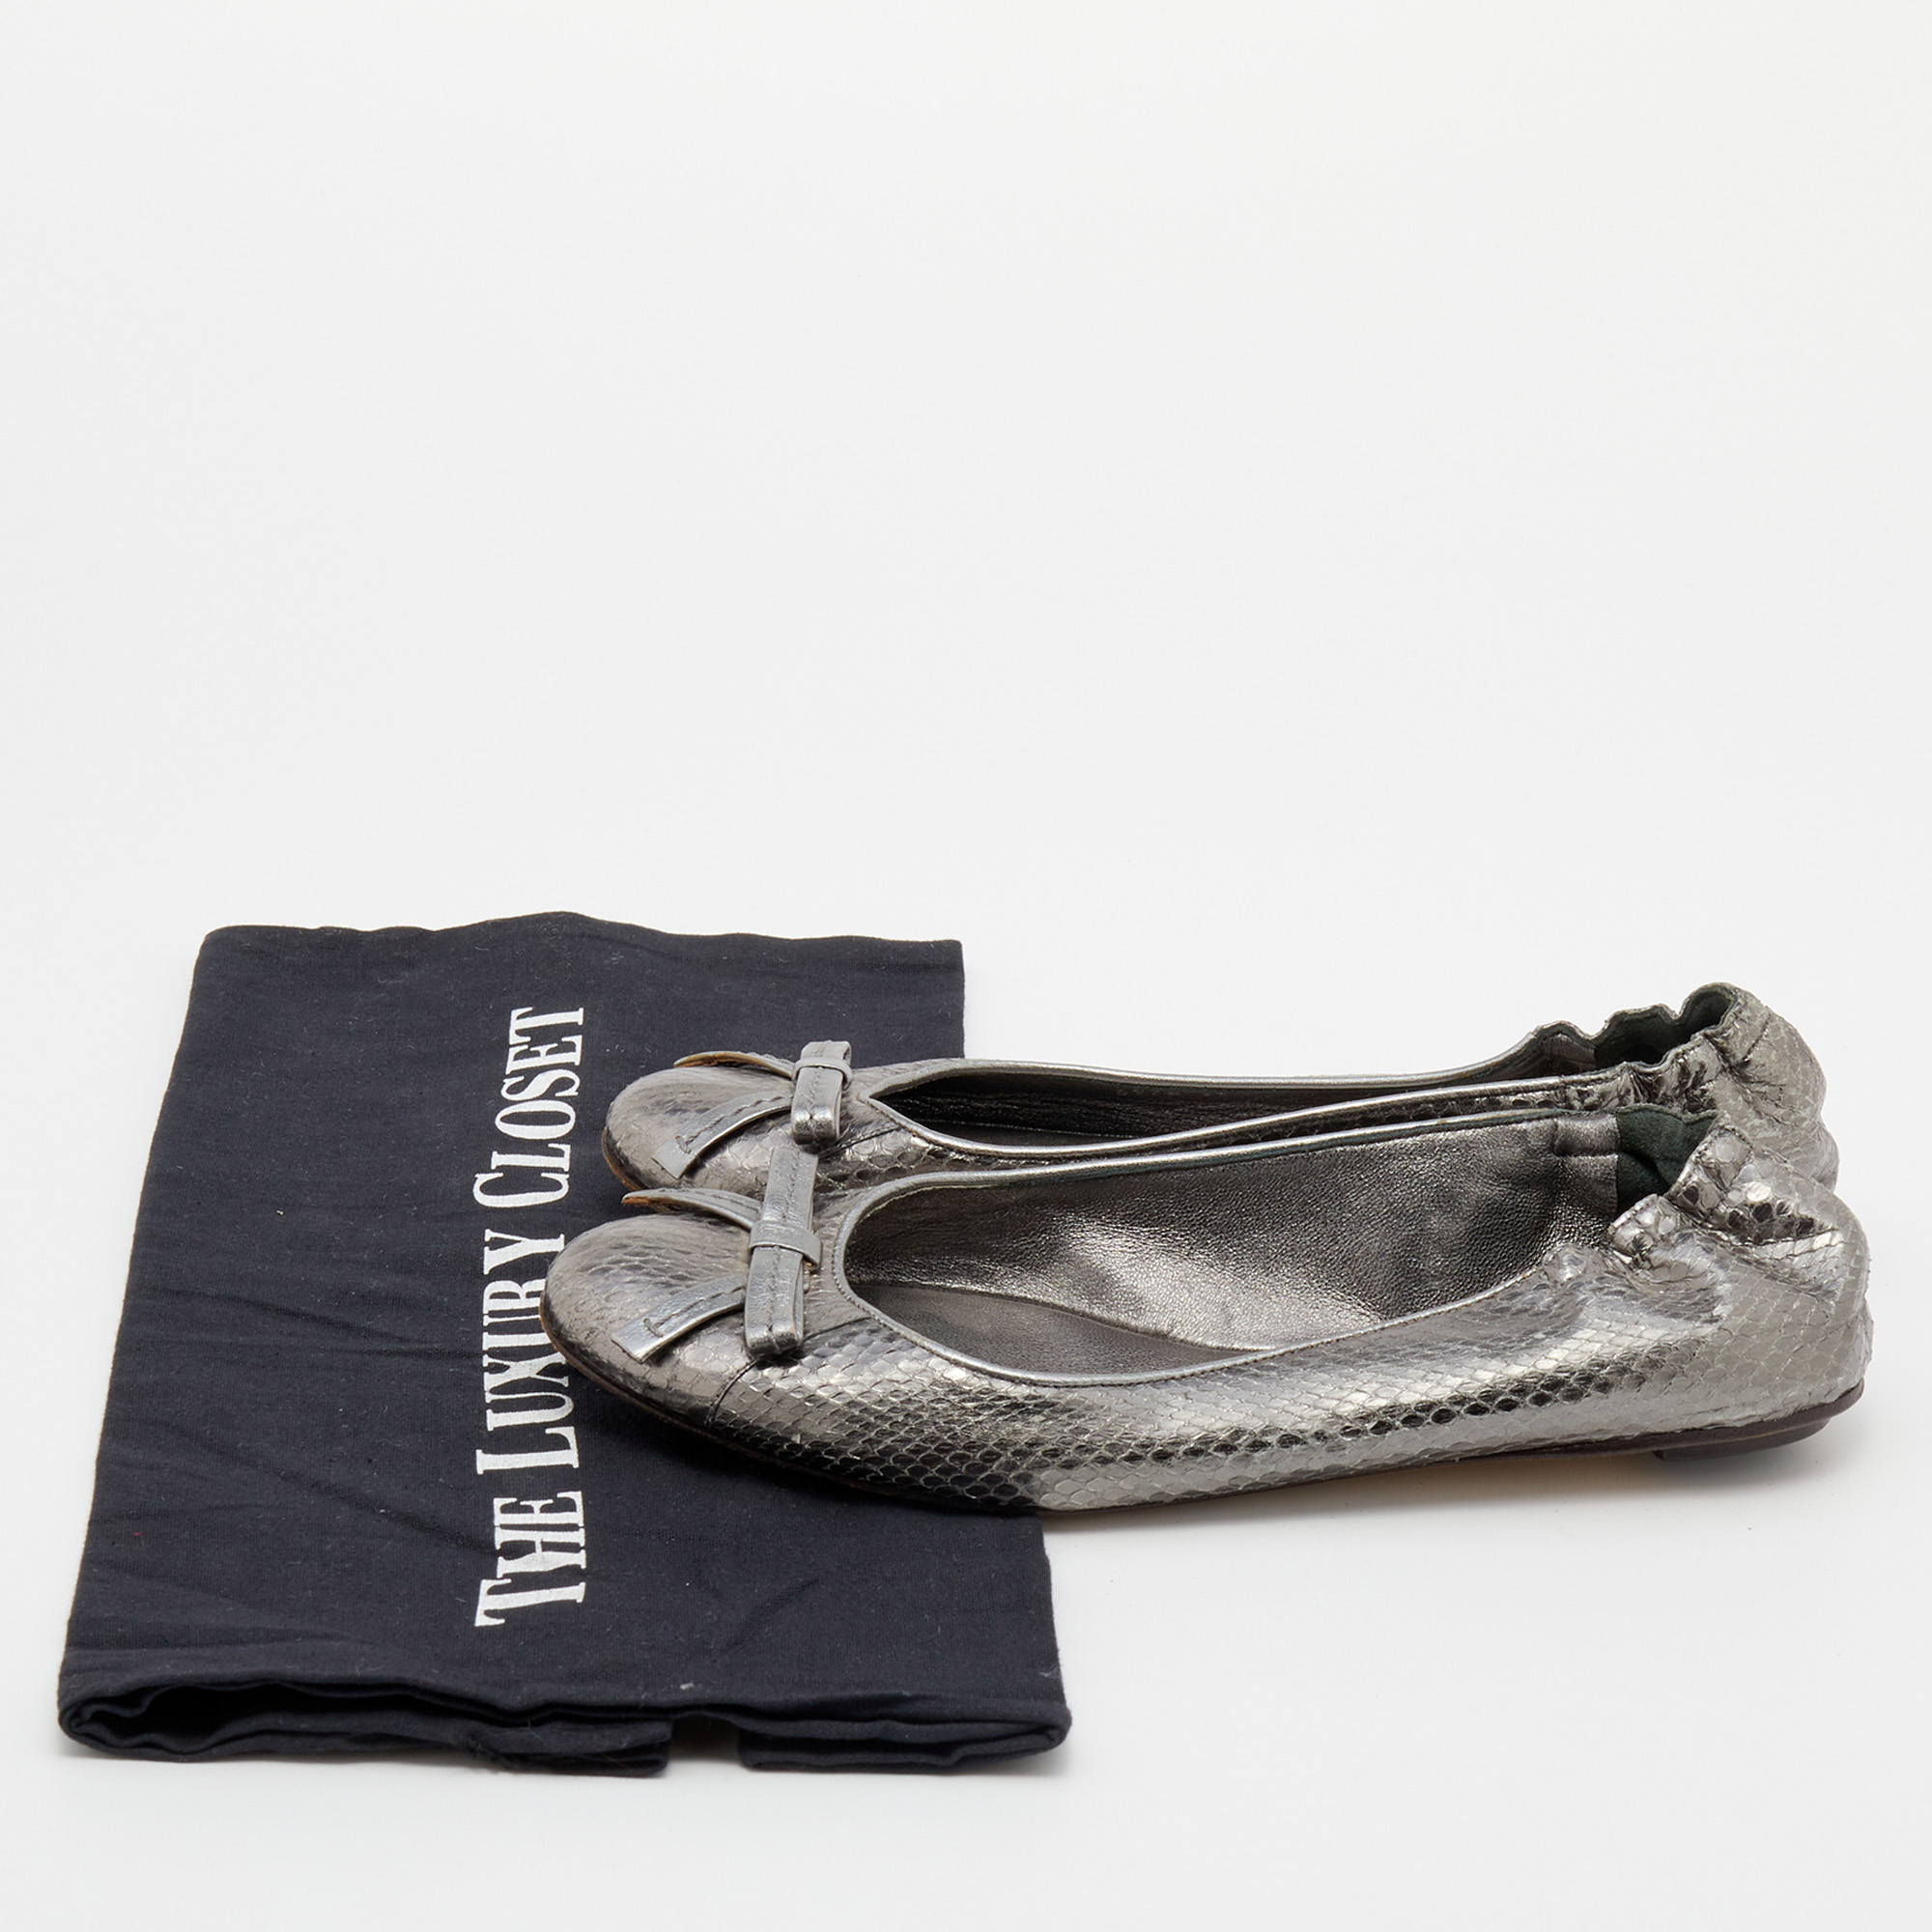 Dolce & Gabbana Metallic Grey Snakeskin Bow Ballet Flats Size 36.5